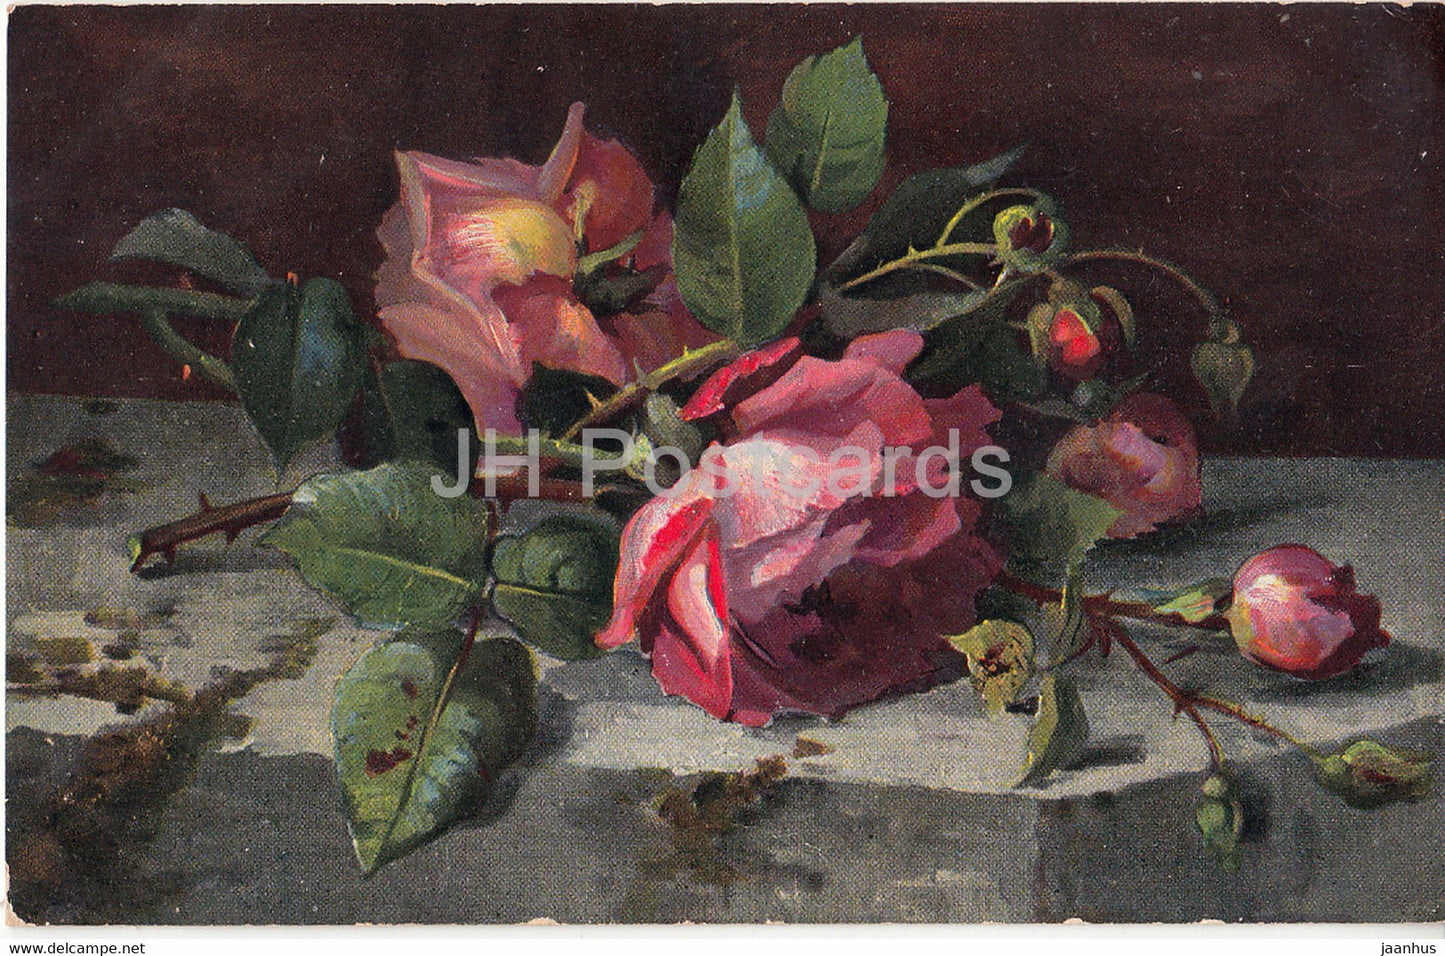 flowers - red roses - K & B D - Serie 3001 - illustration - old postcard - Germany - unused - JH Postcards